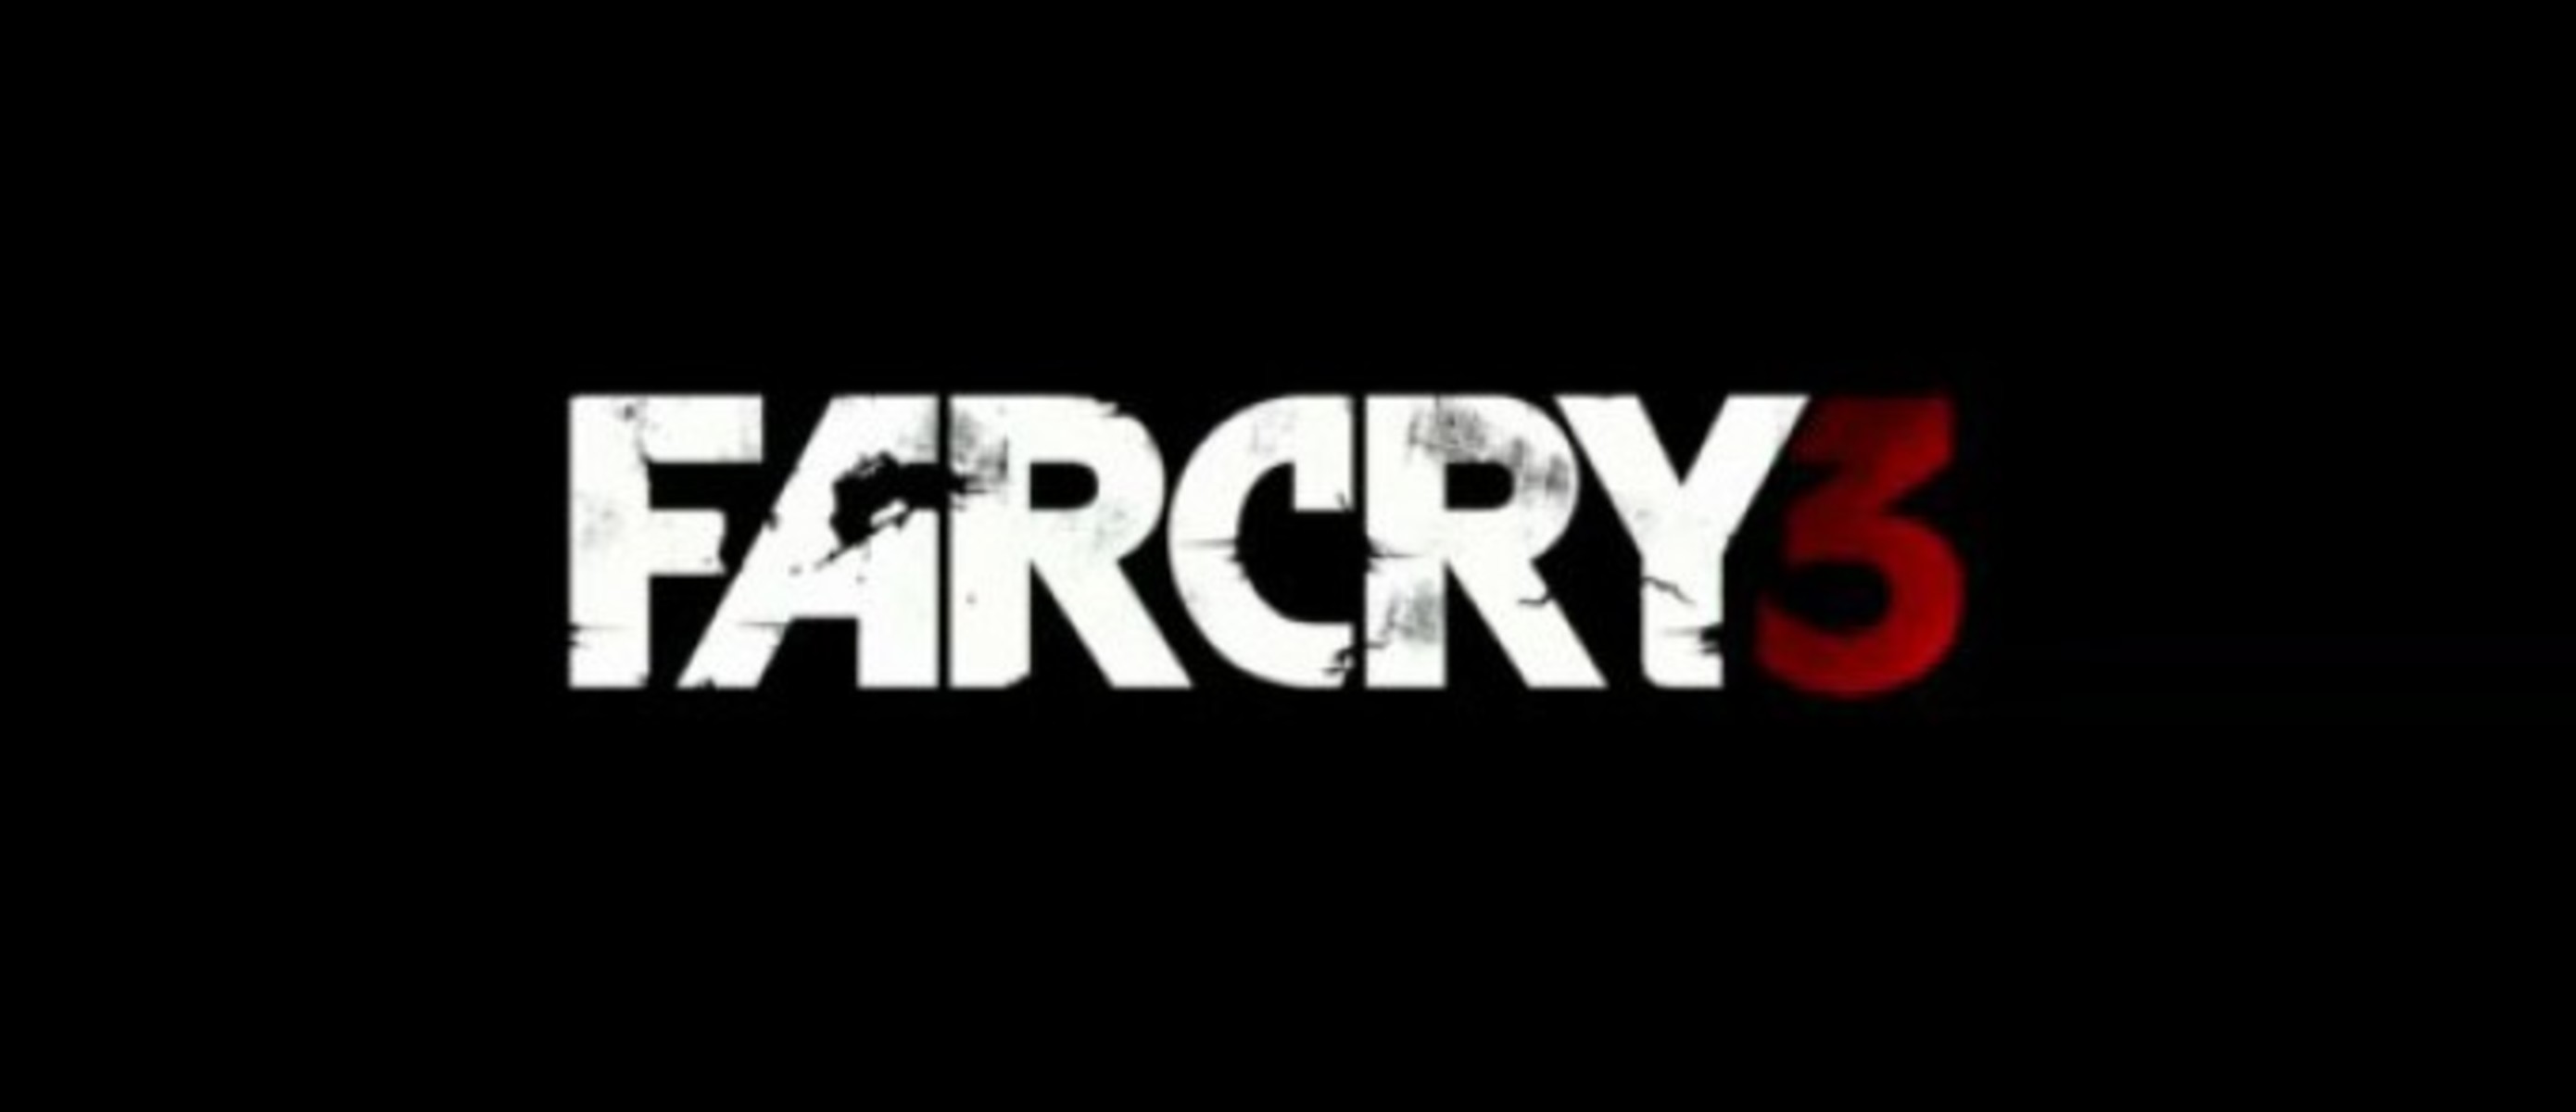 Far org. Фар край 4 логотип. Фар край 3 логотип. Фар край 4 значок. Far Cry 3 надпись.